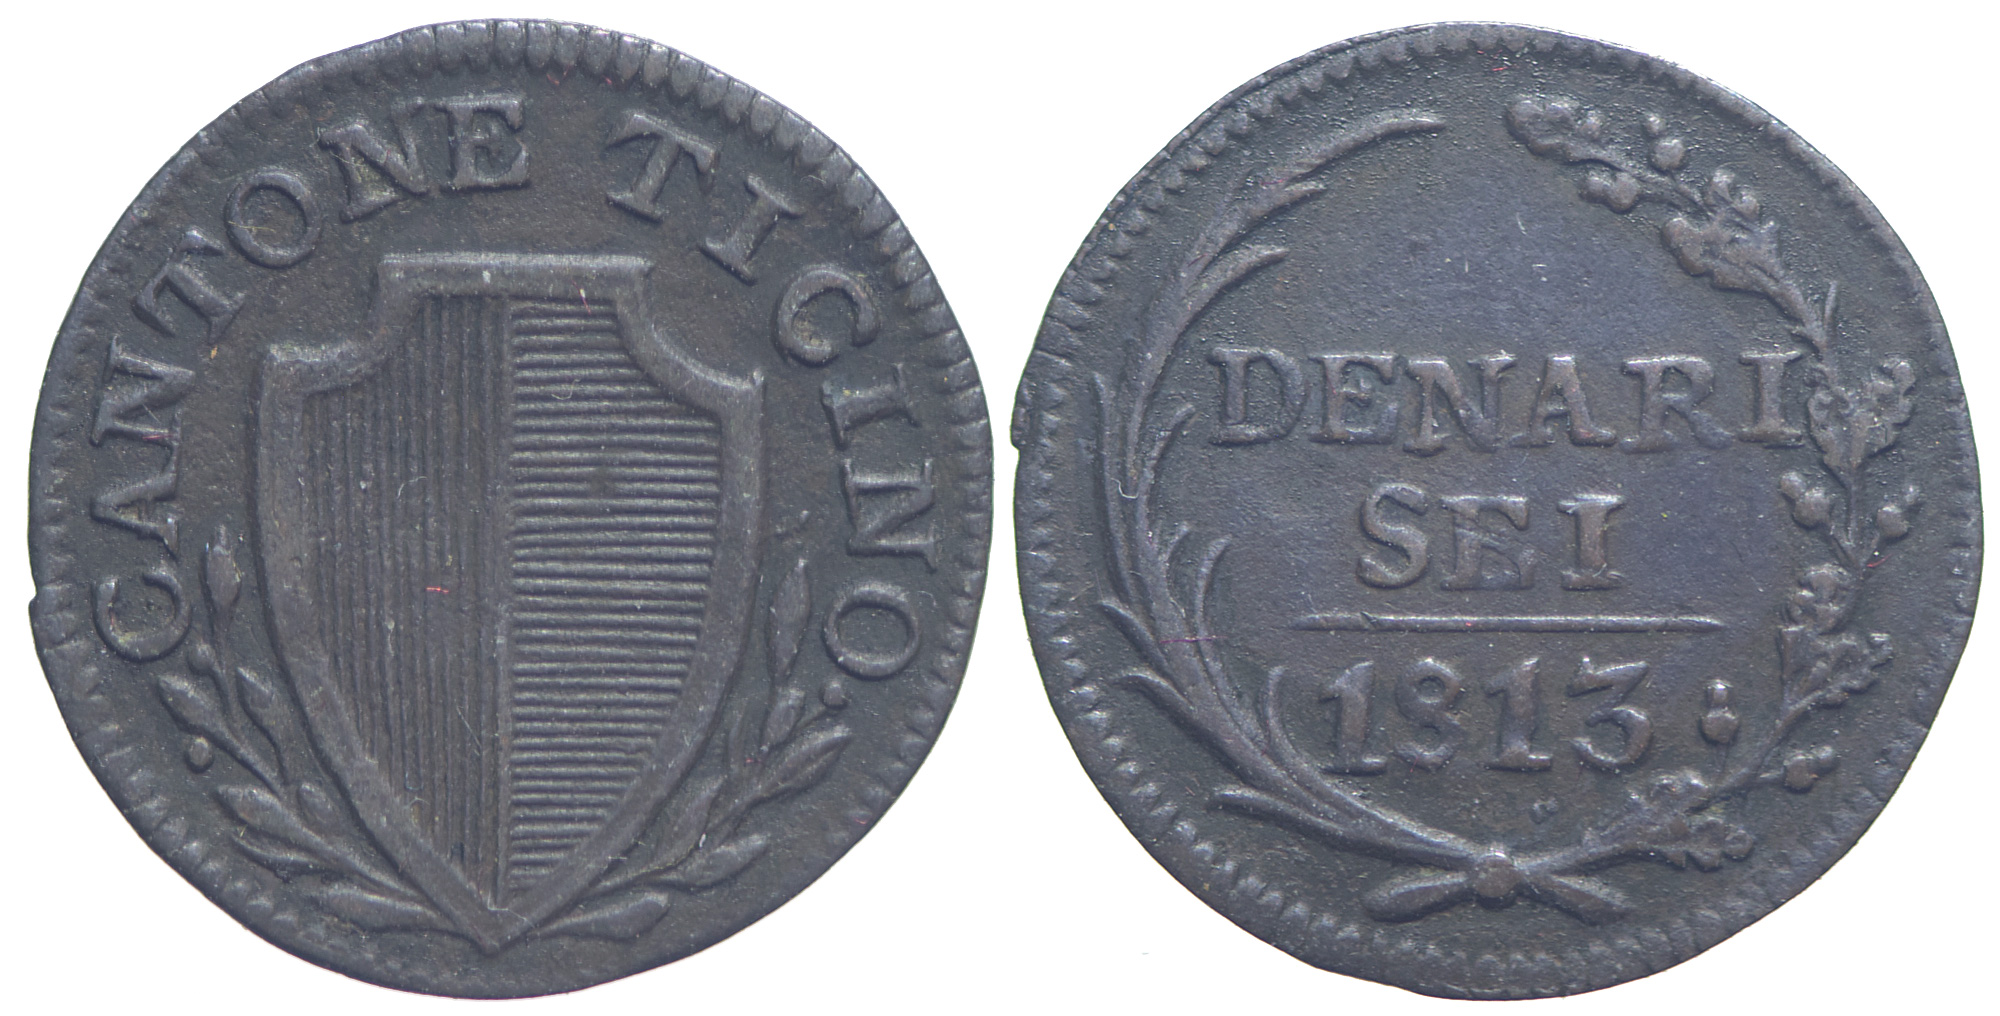 Switzerland Ticino Republic Denari 1813 